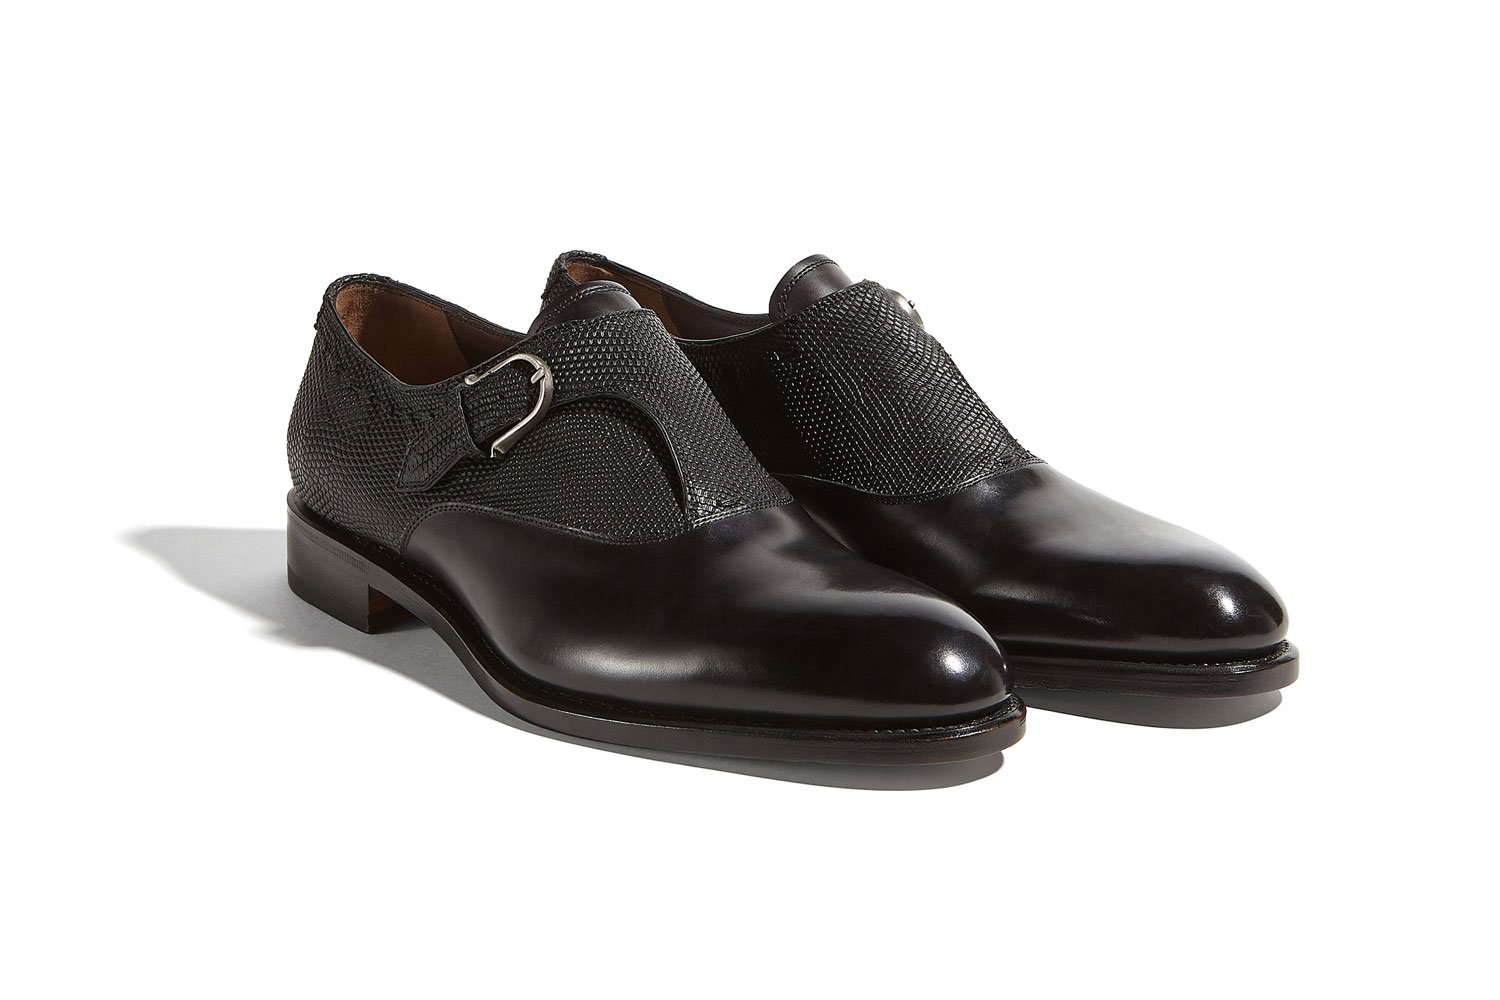 Are Salvatore Ferragamo men's dress shoes worth the price and comfort? -  Quora